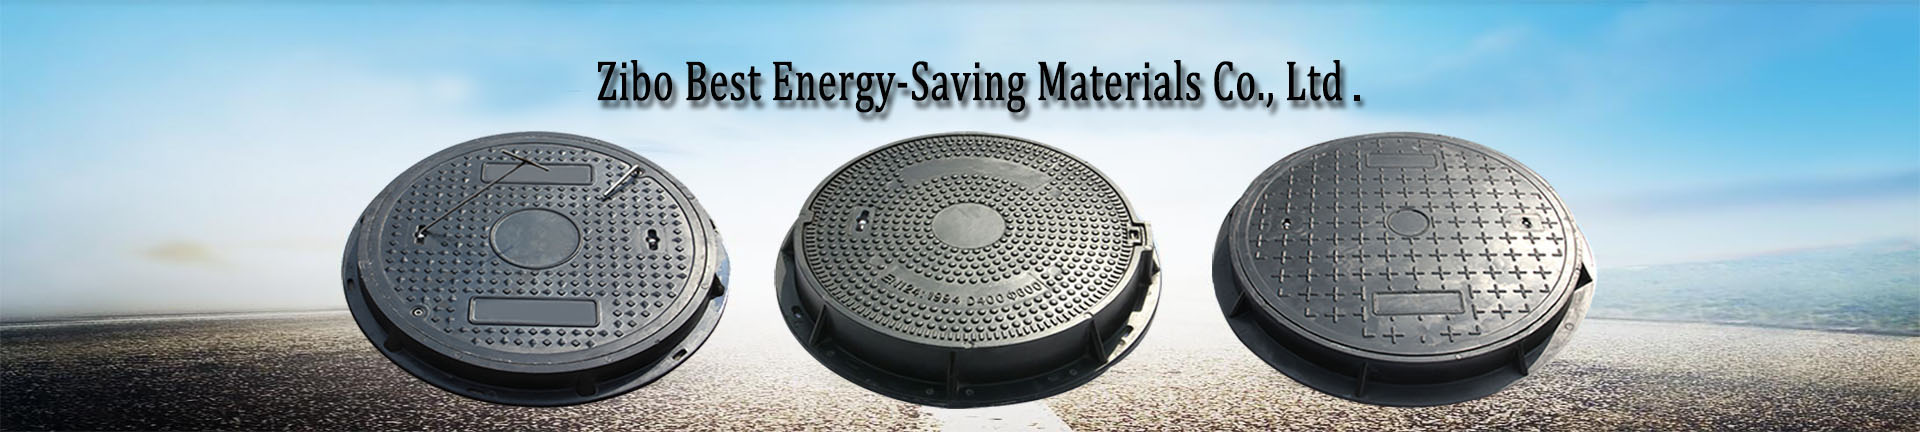 Zibo Best Energy-Saving materials co., Ltd